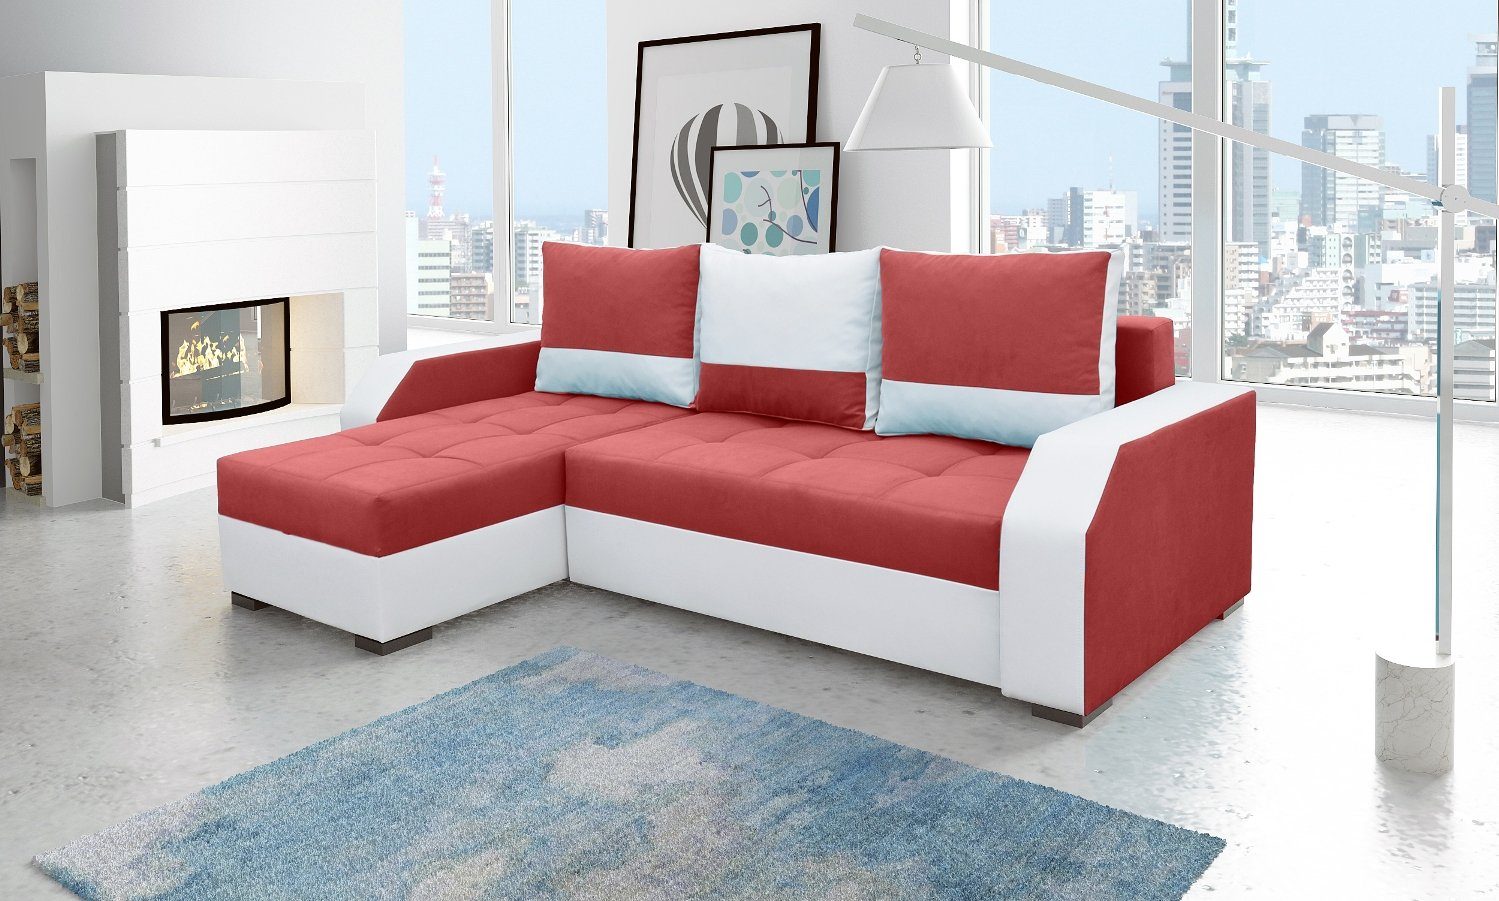 JVmoebel Ecksofa, Design Ecksofa Bettfunktion Couch Leder Textil Polster Sofas Couchen Rot / Weiß